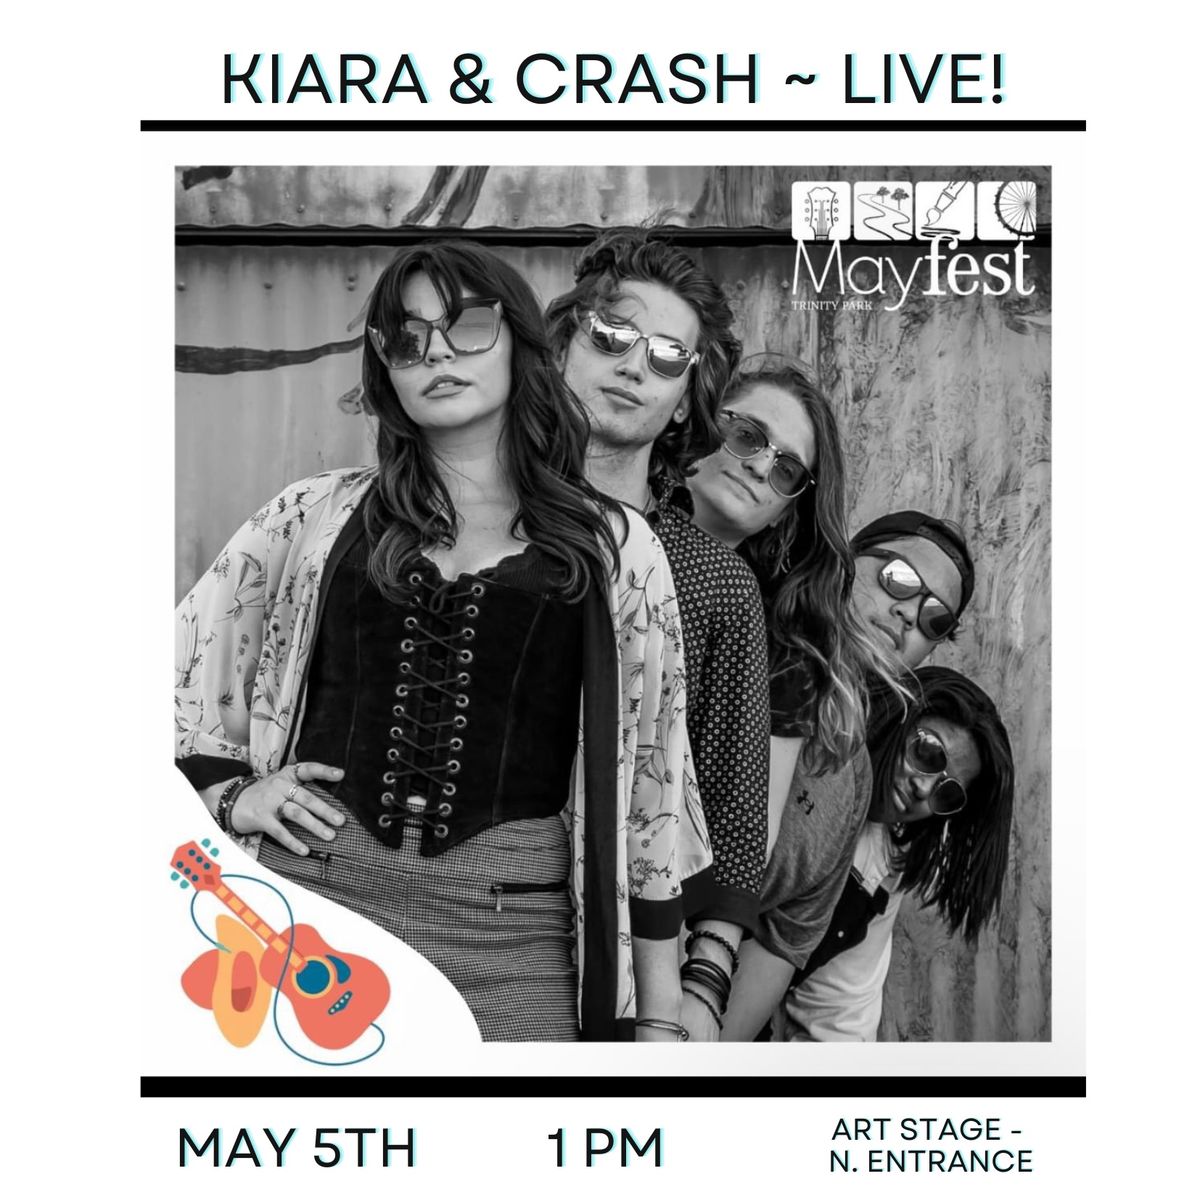 Kiara & Crash LIVE @ Mayfest